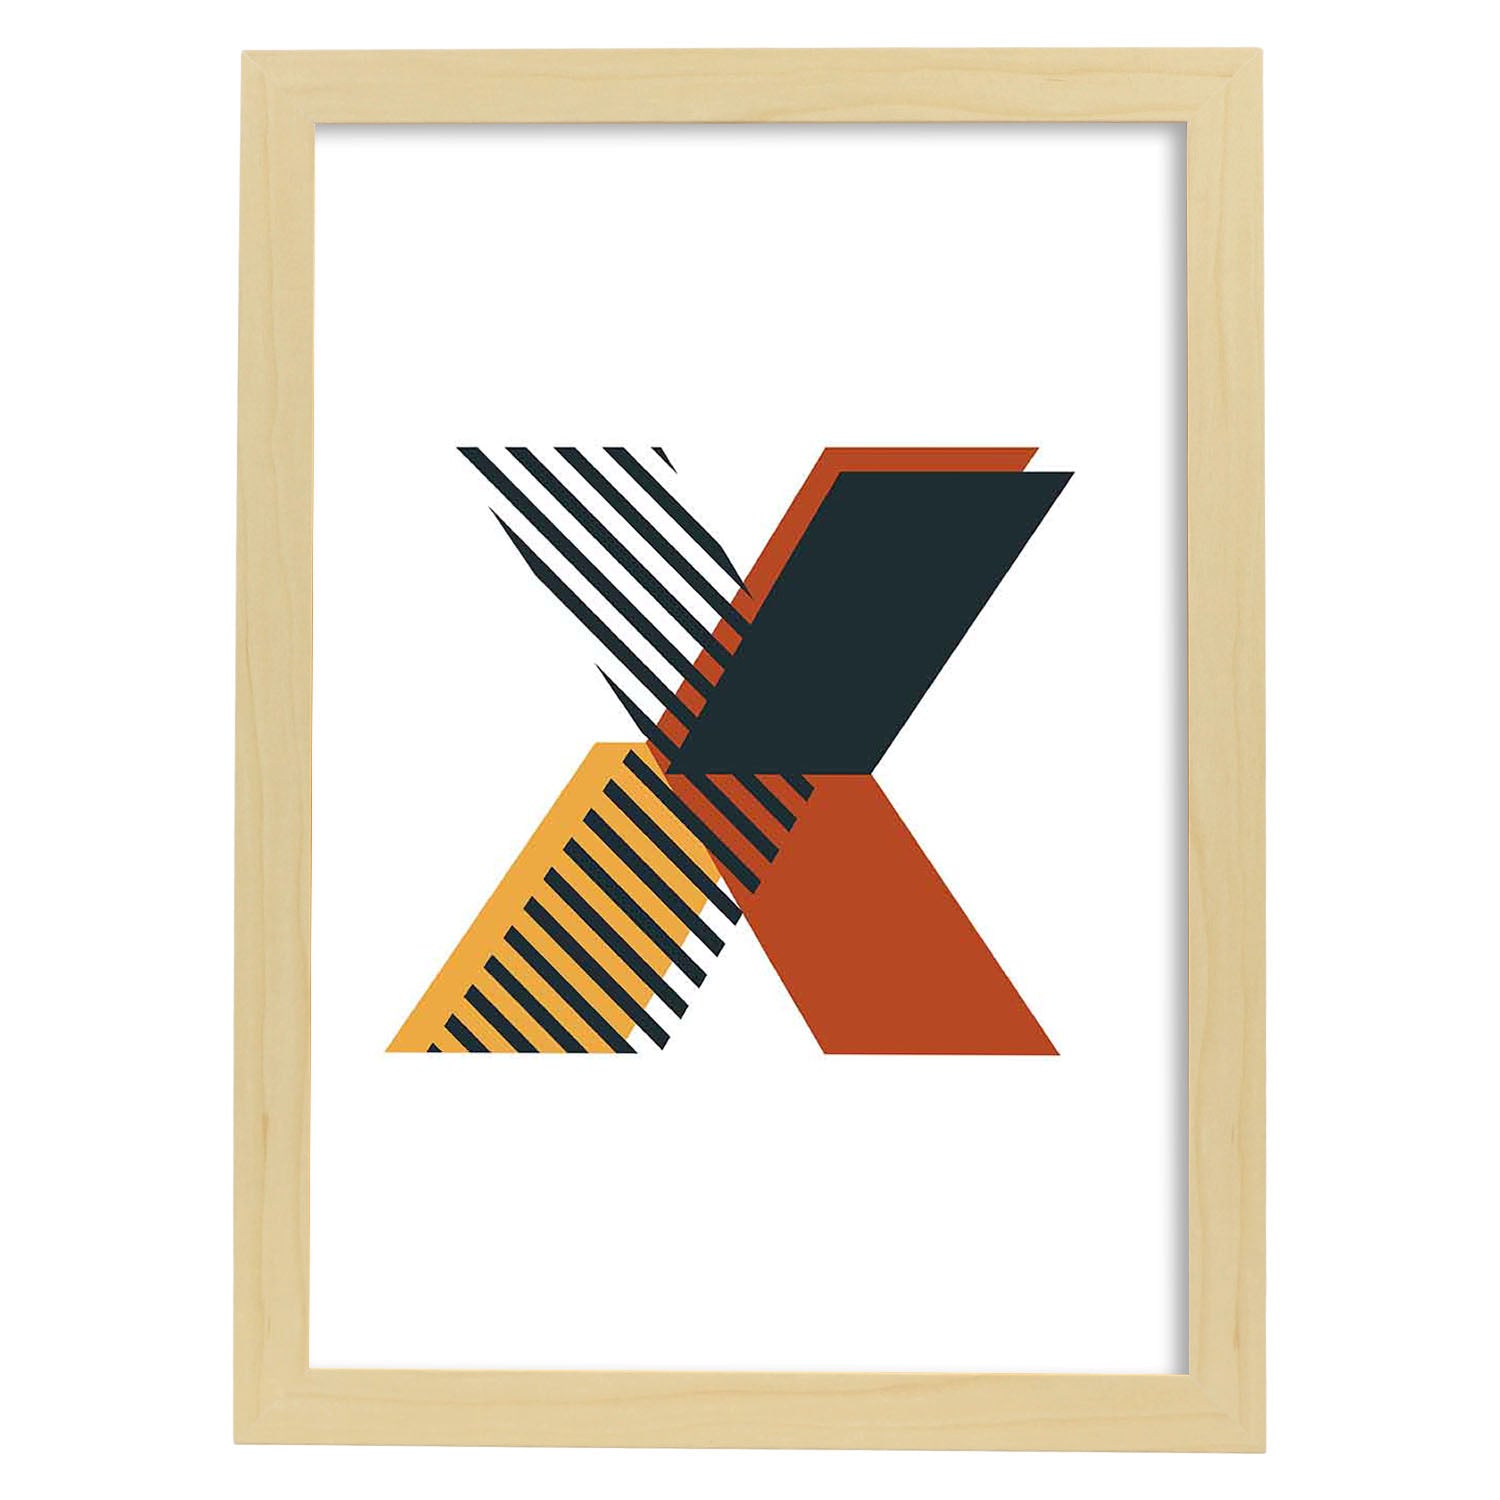 Poster de letra X. Lámina estilo Geometria con imágenes del alfabeto.-Artwork-Nacnic-A4-Marco Madera clara-Nacnic Estudio SL